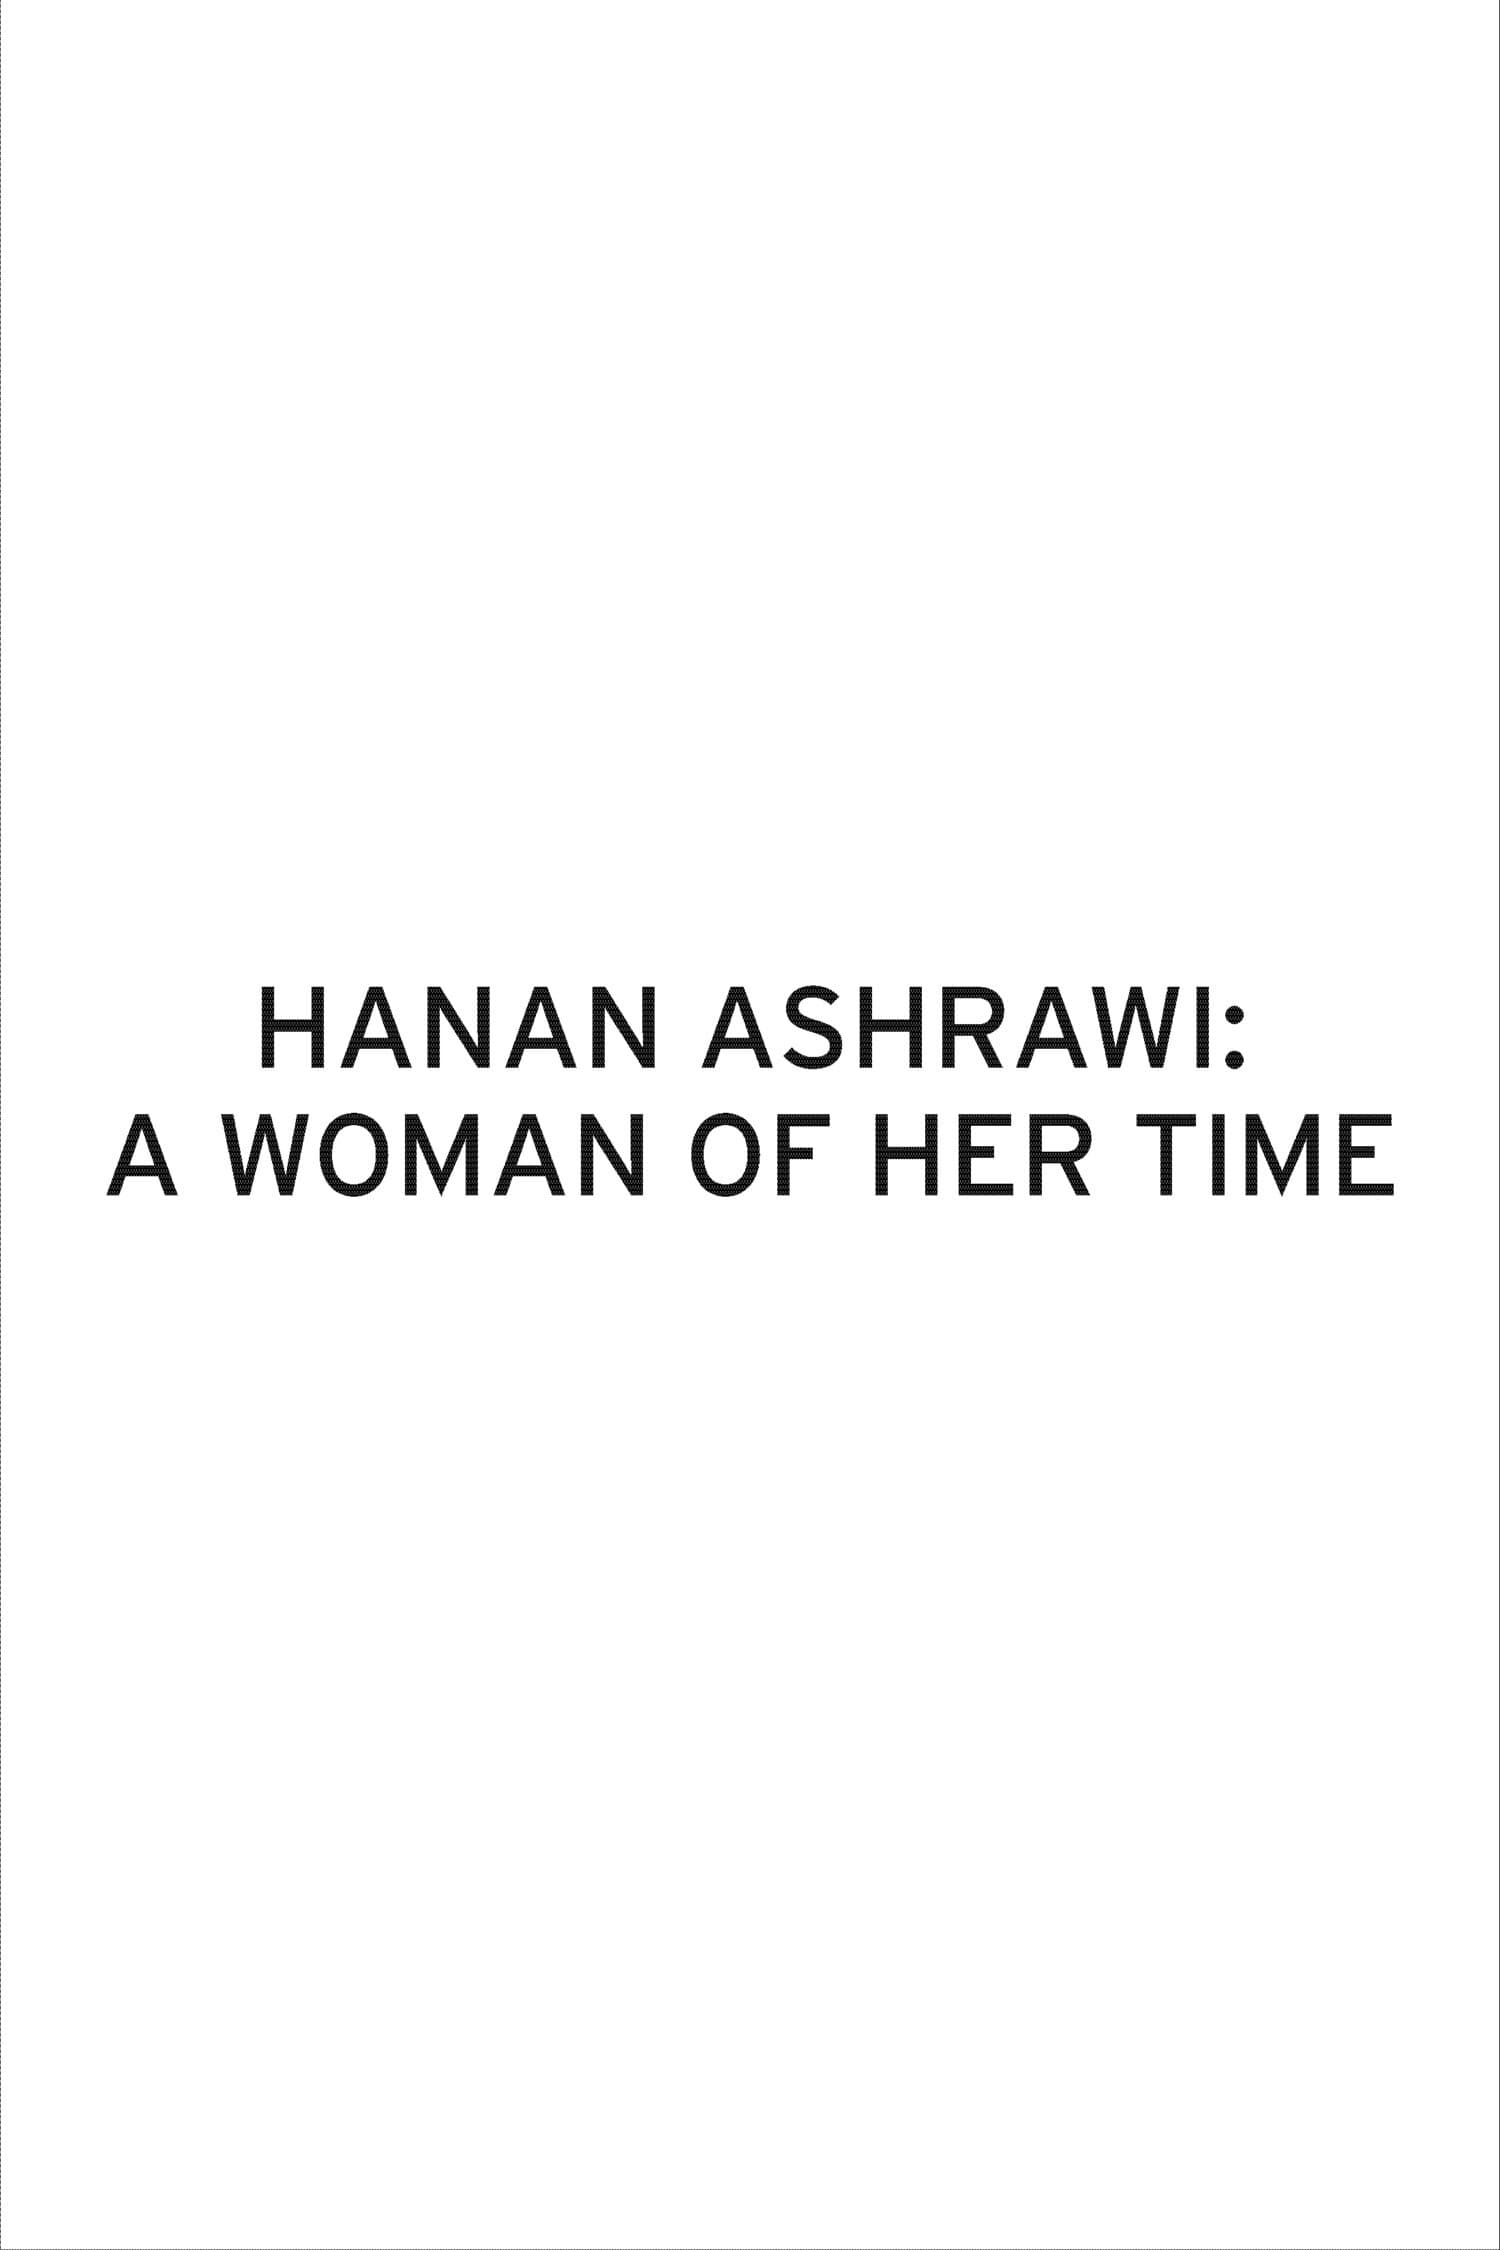 Hanan Ashrawi: A Woman of Her Time